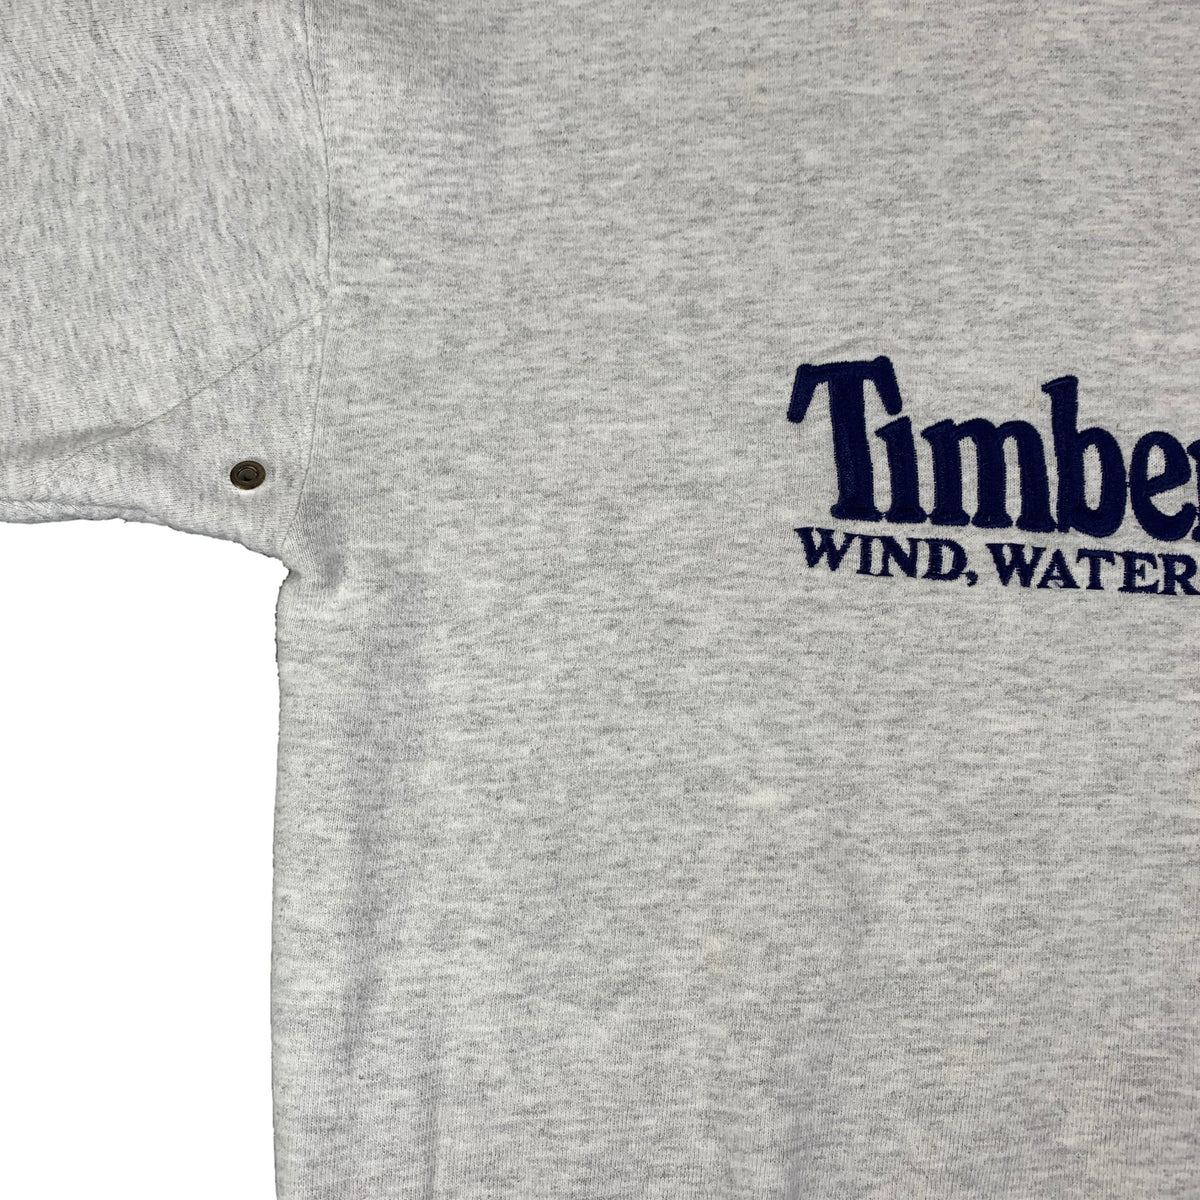 Vintage Timberland &quot;Weathergear&quot; Crewneck Sweatshirt - jointcustodydc